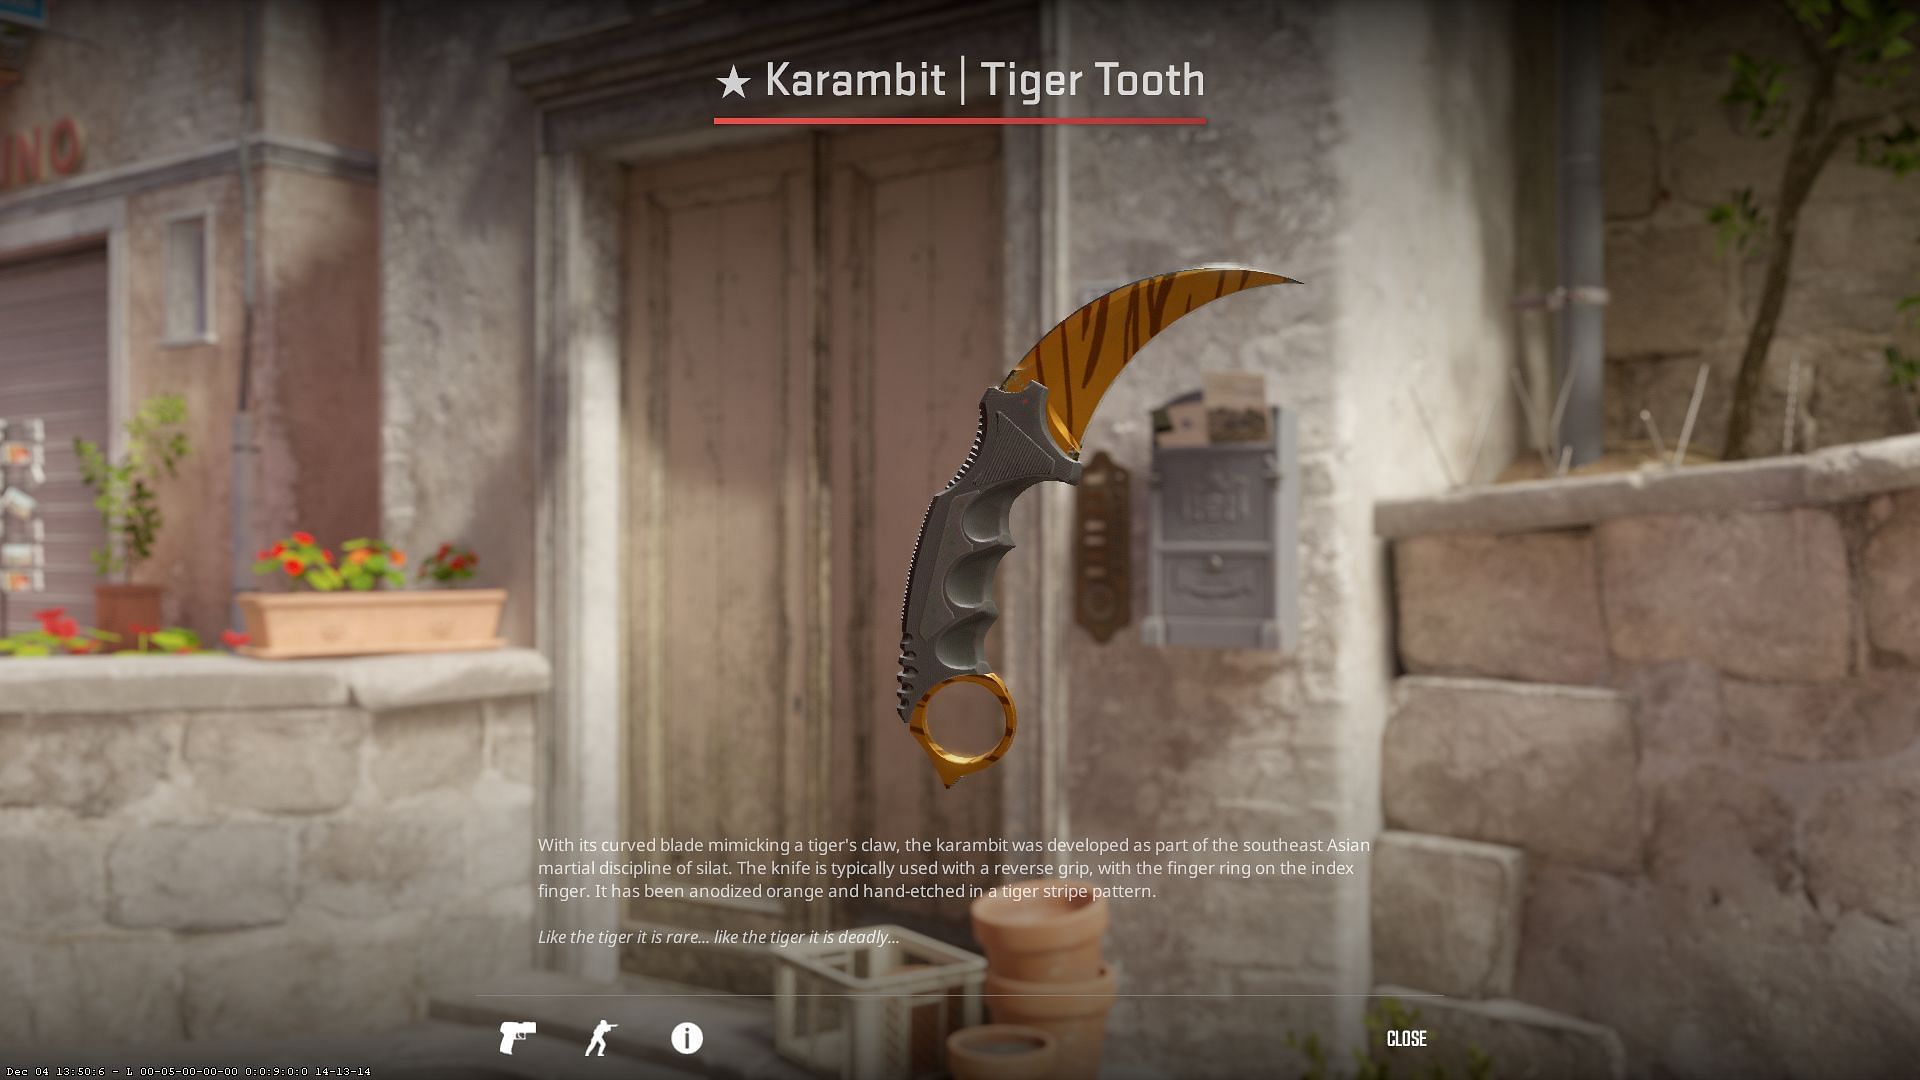 Karambit Tiger Tooth (Image via Valve)